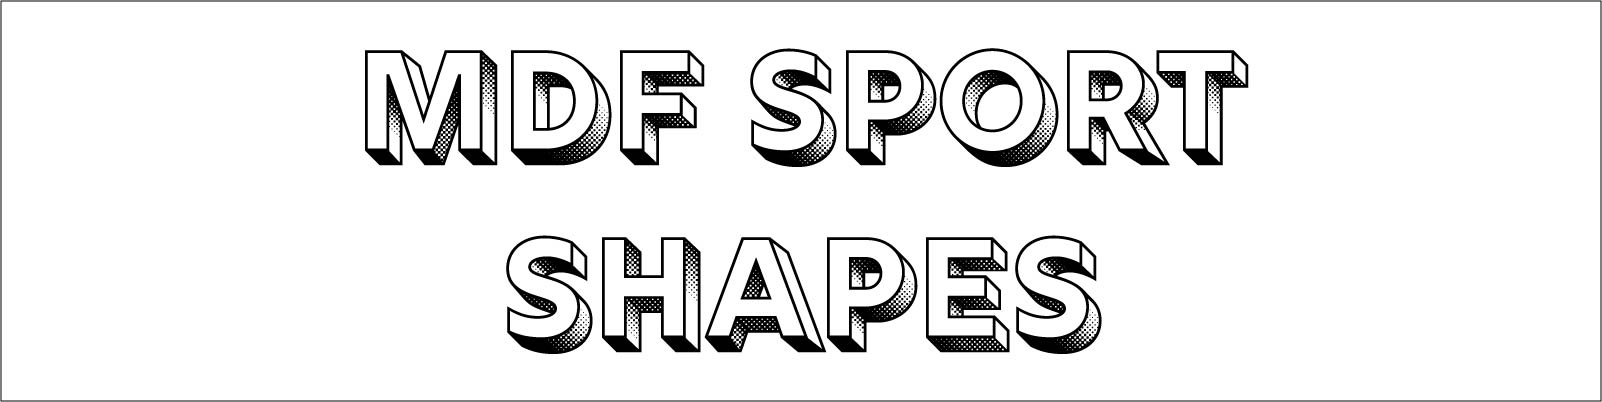 MDF Sport Shapes